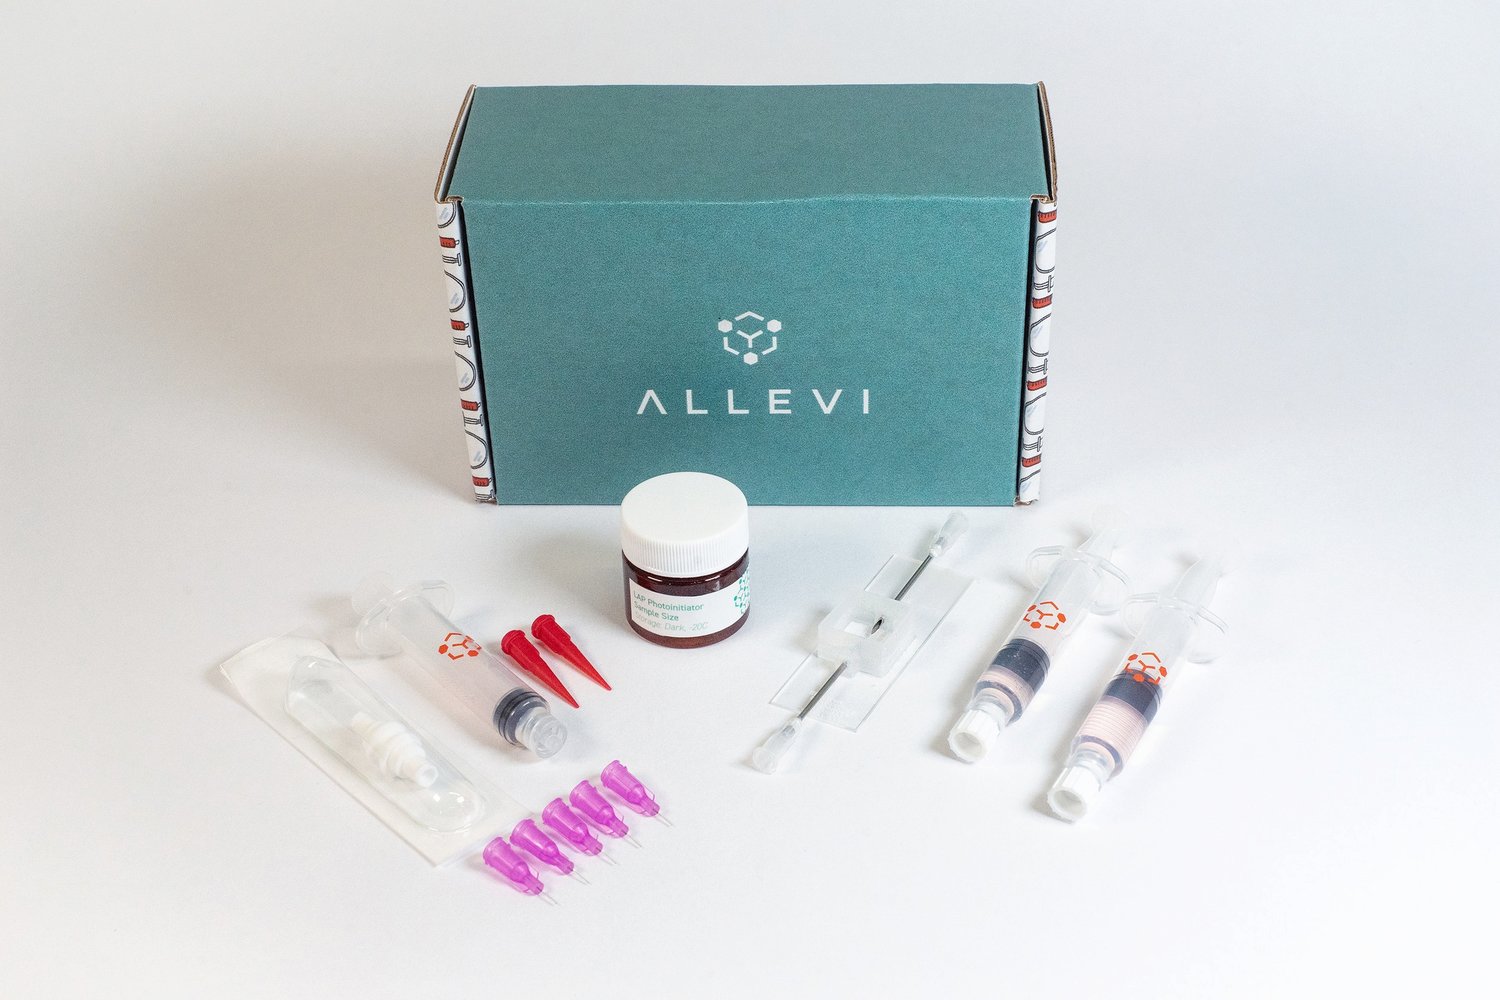 allevi Vascularization Protocol for bioprinting veins